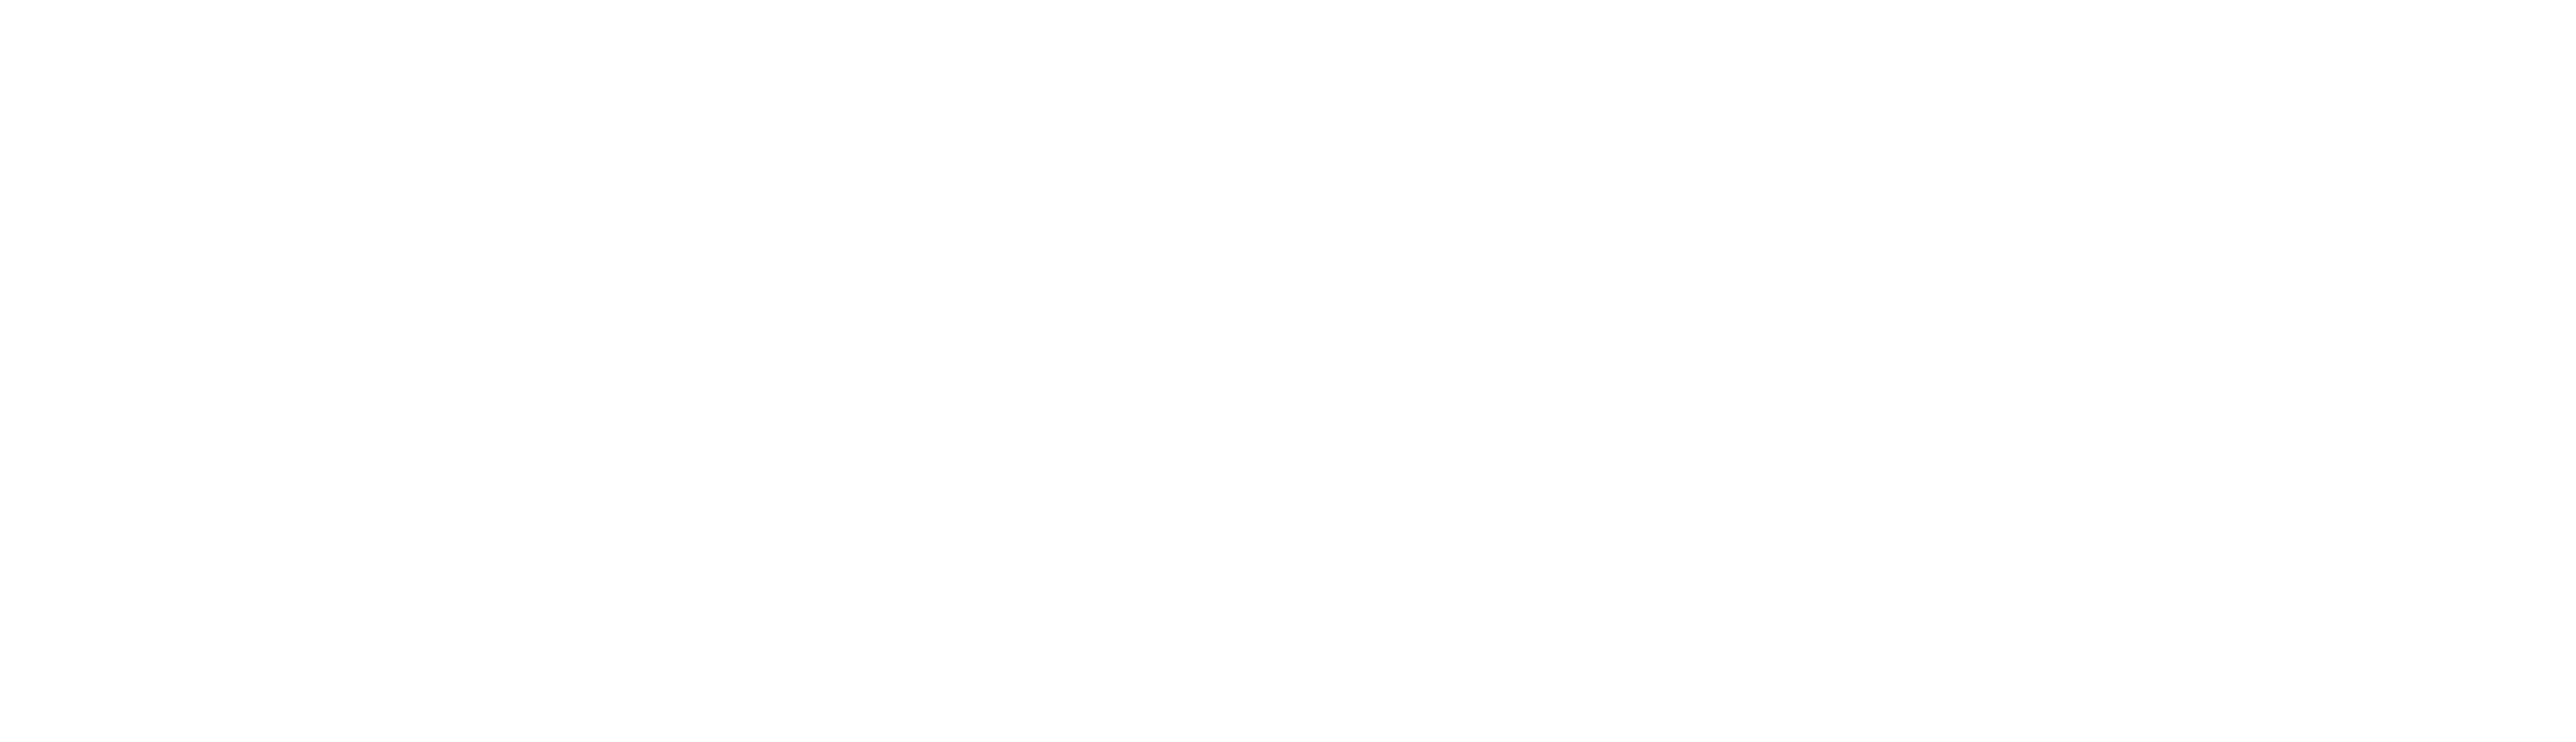 Timothy Parros - Elite Power of Zero Advisor